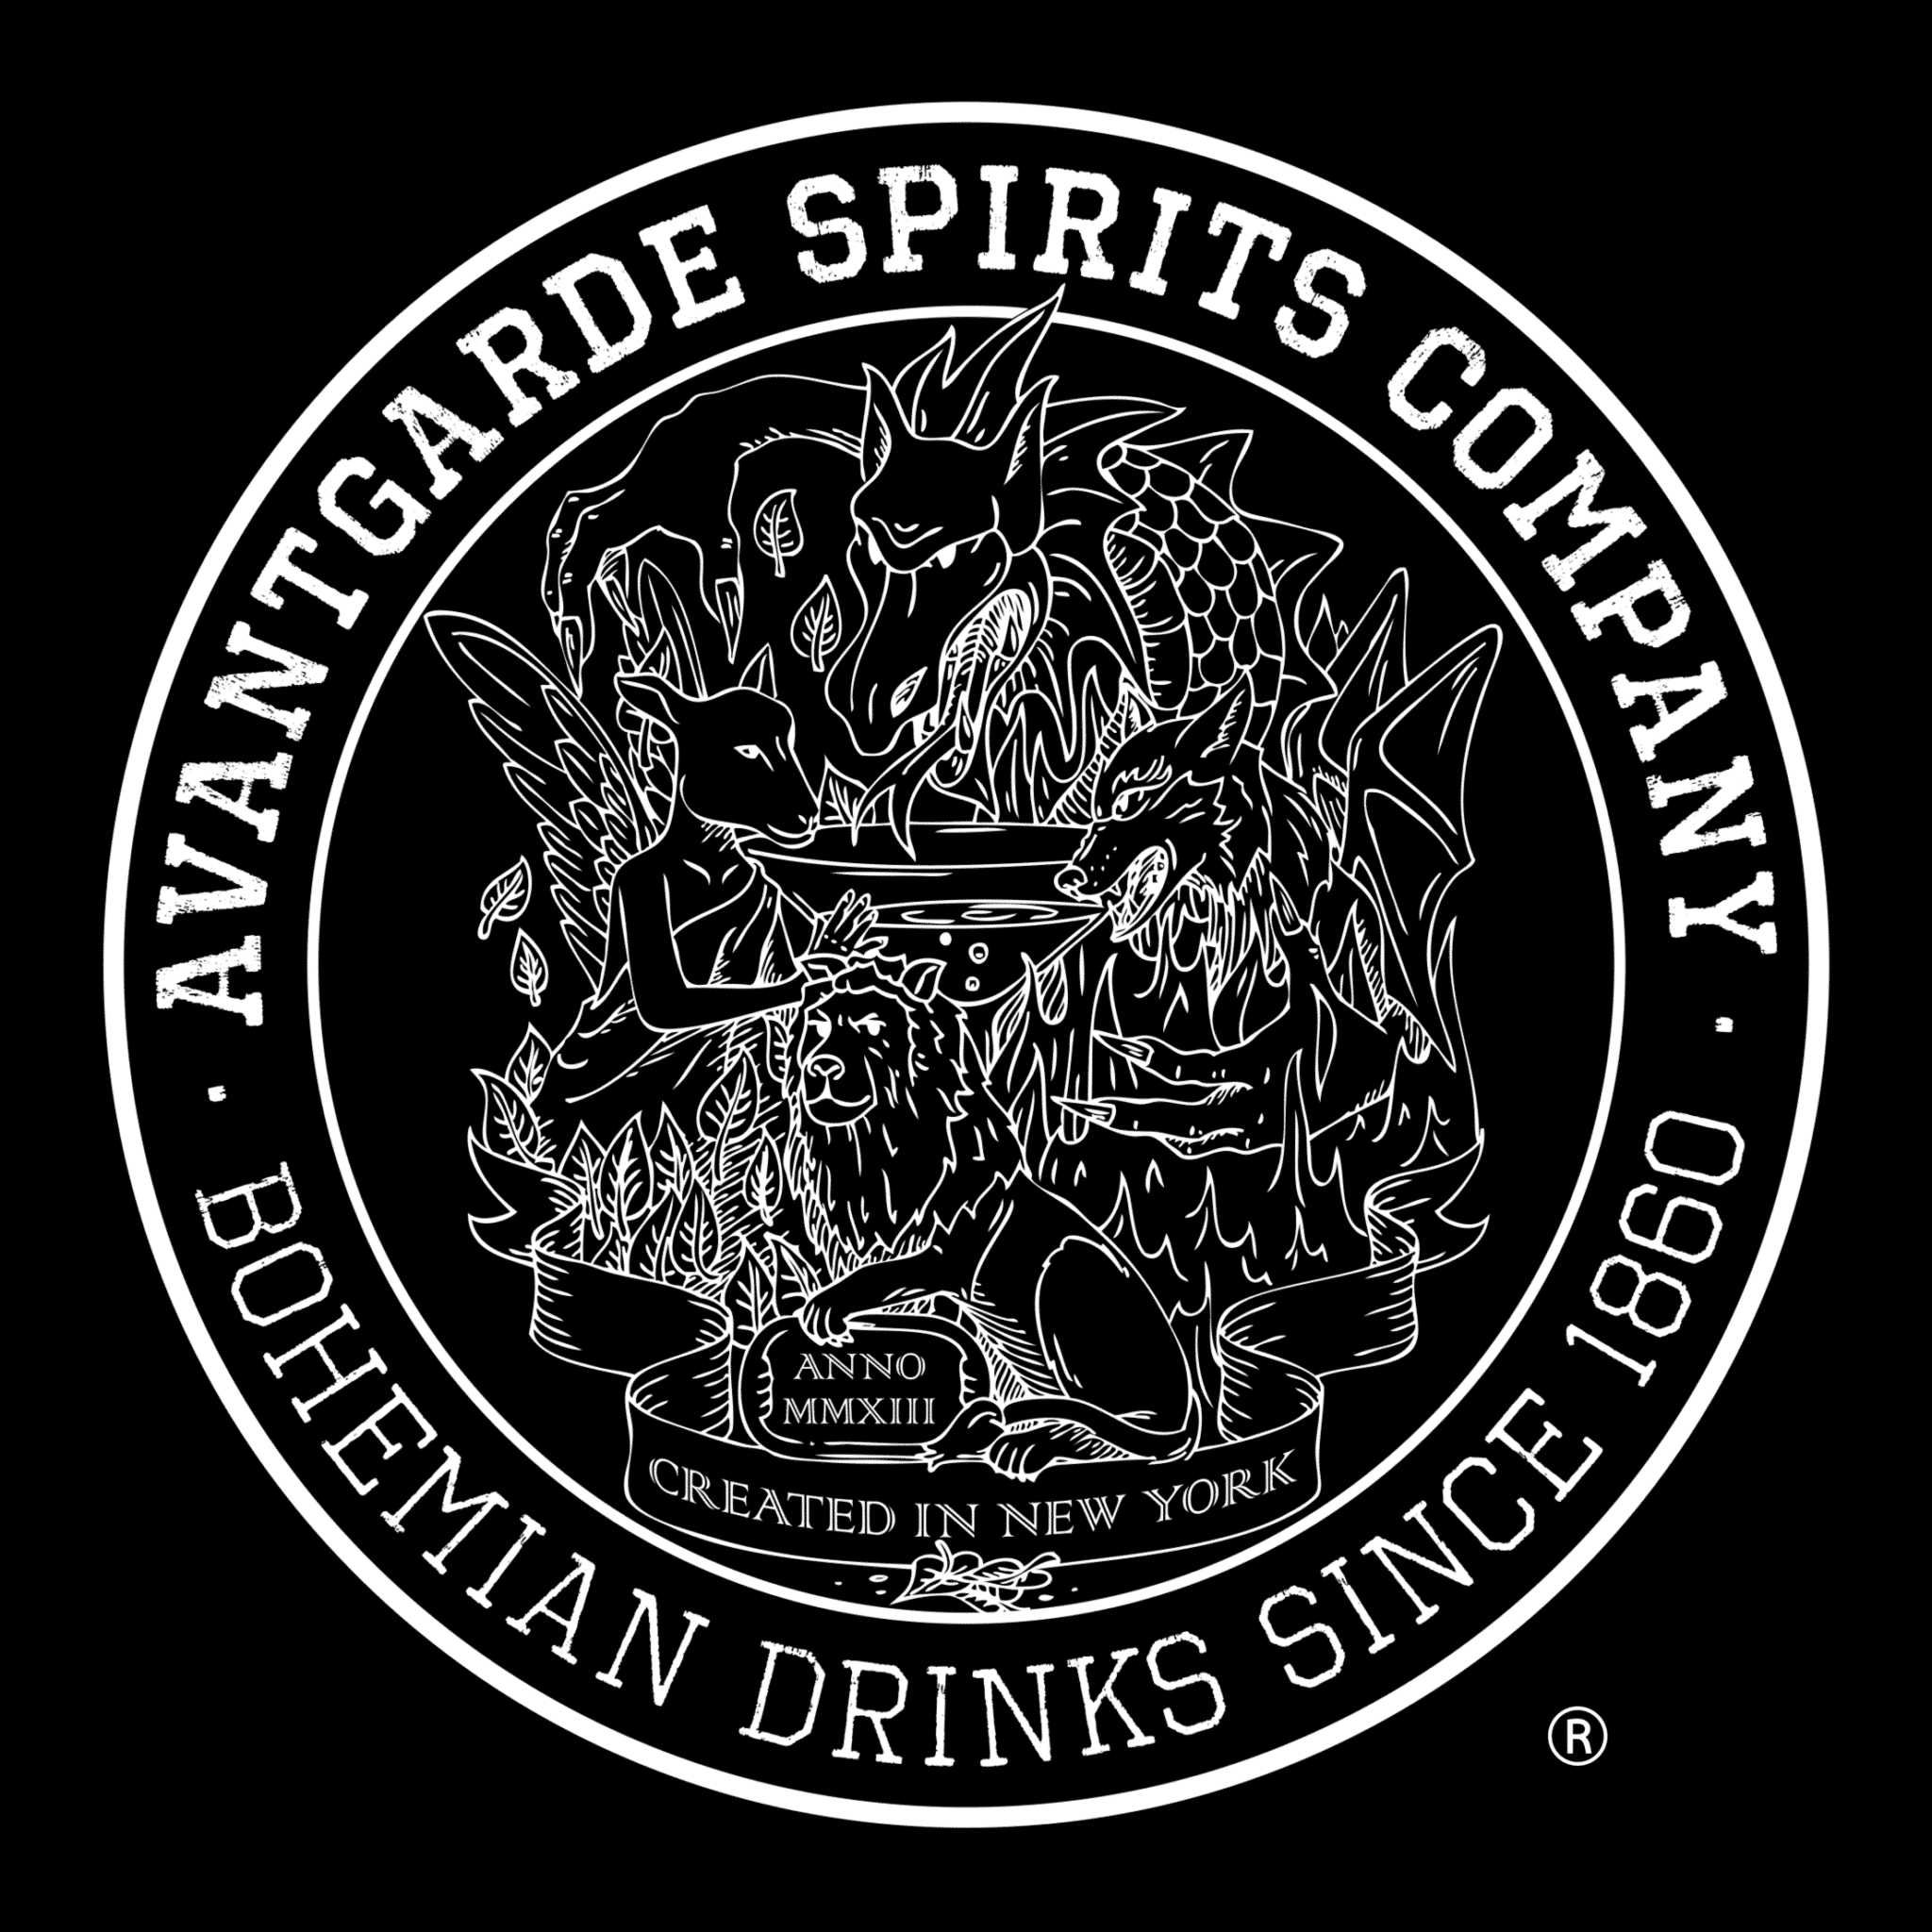  Avantgarde Spirits Company